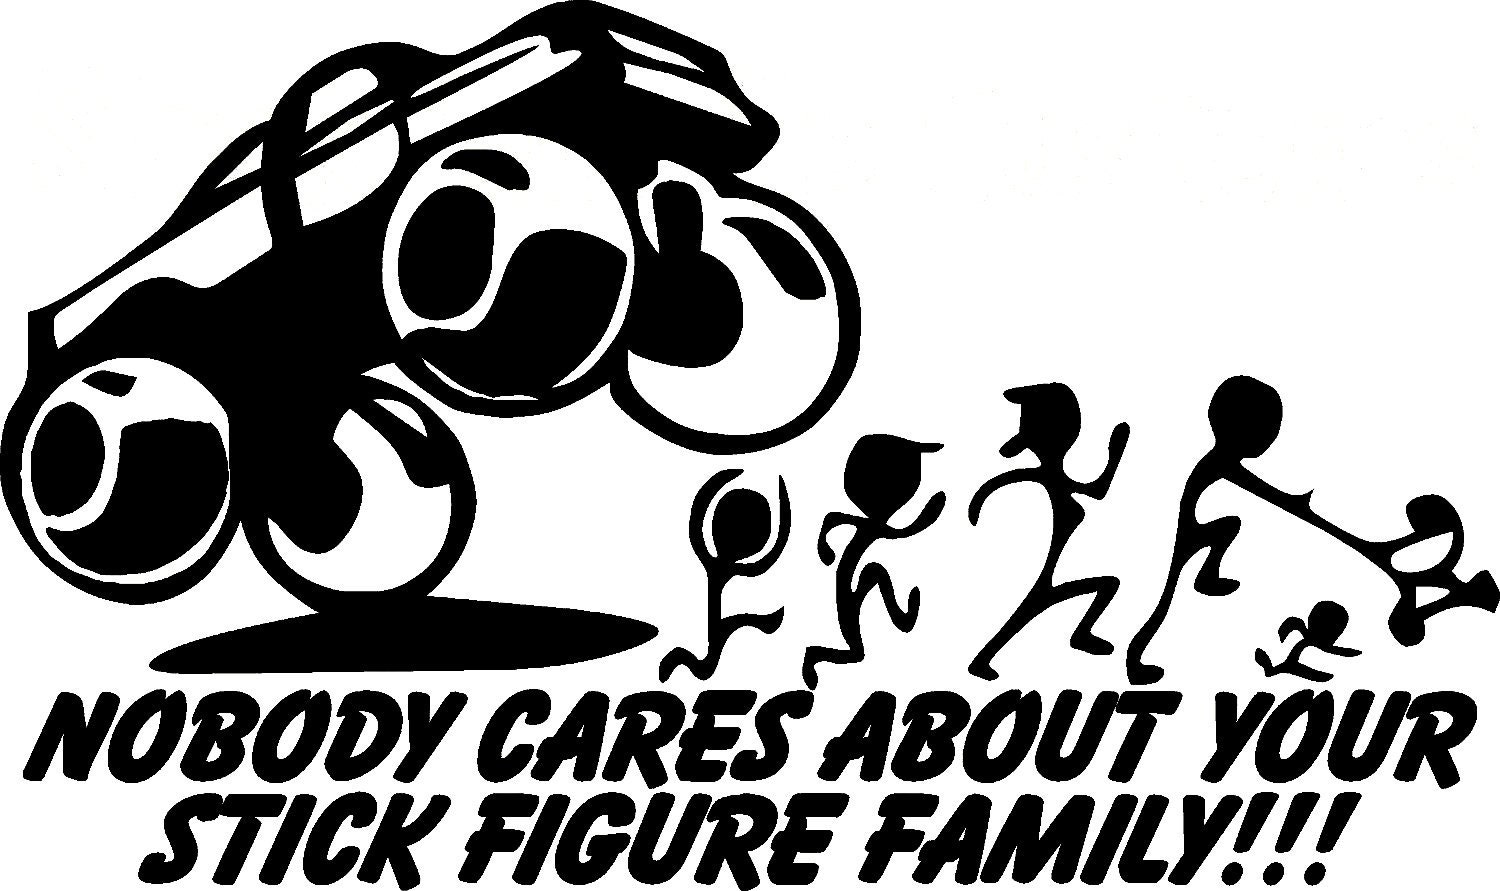 Download Anti-Stick Figure Family Decal Sticker Funny Bumper Sticker